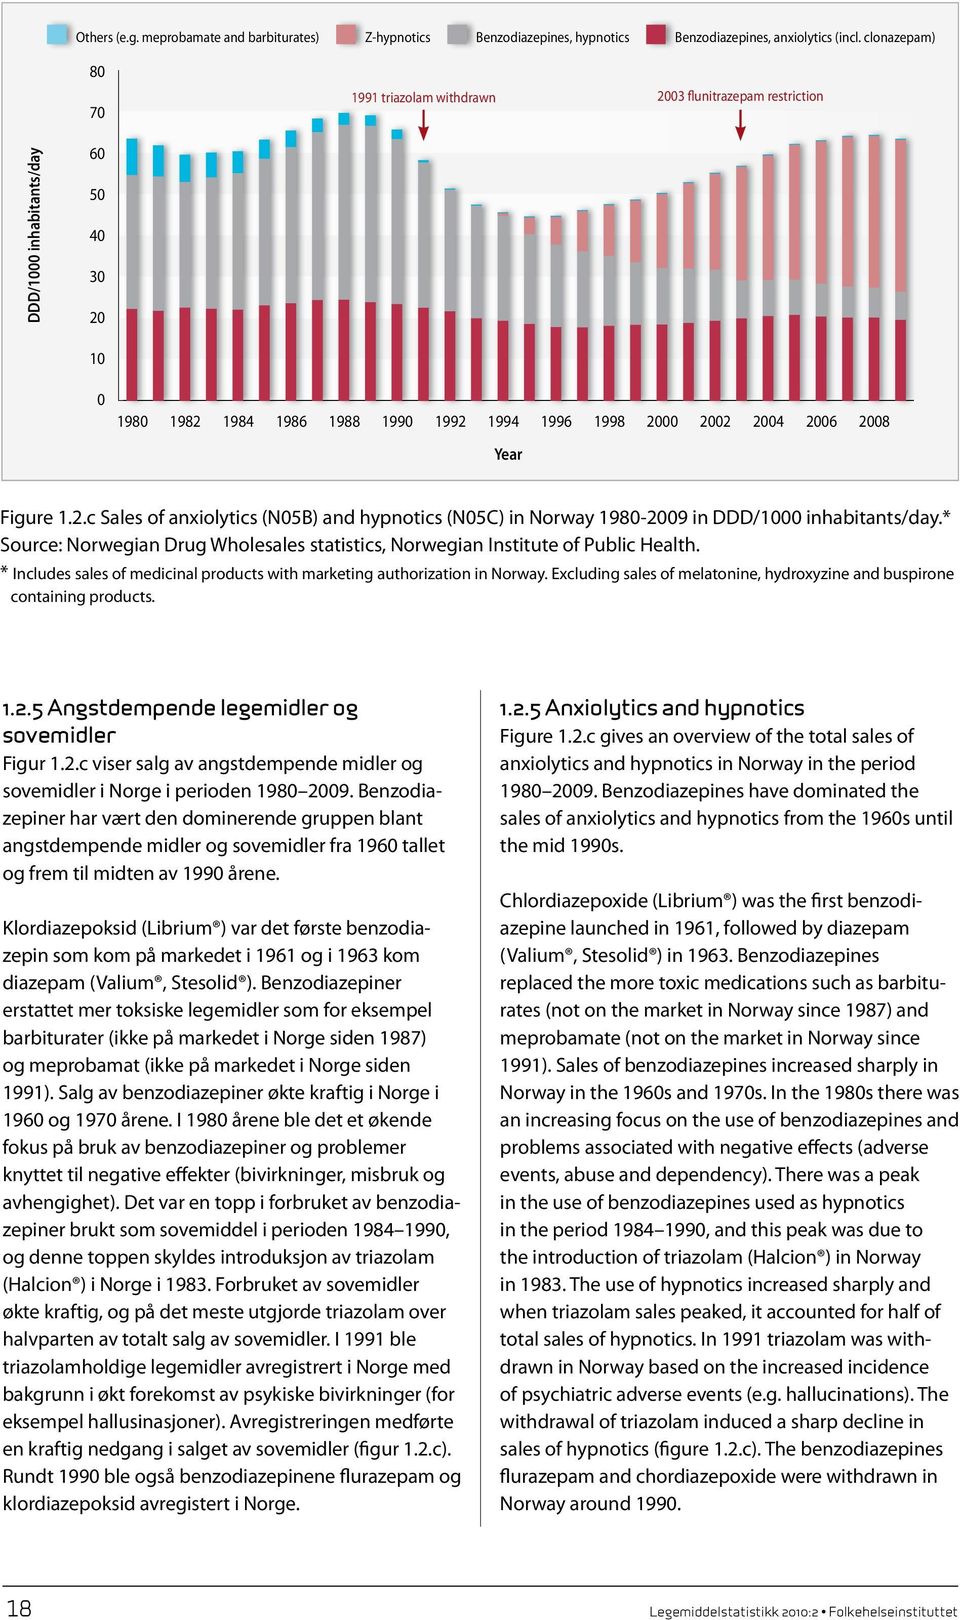 Figure 1.2.c Sales of anxiolytics (N05B) and hypnotics (N05C) in Norway 1980-2009 in DDD/1000 inhabitants/day.* Source: Norwegian Drug Wholesales statistics, Norwegian Institute of Public Health.